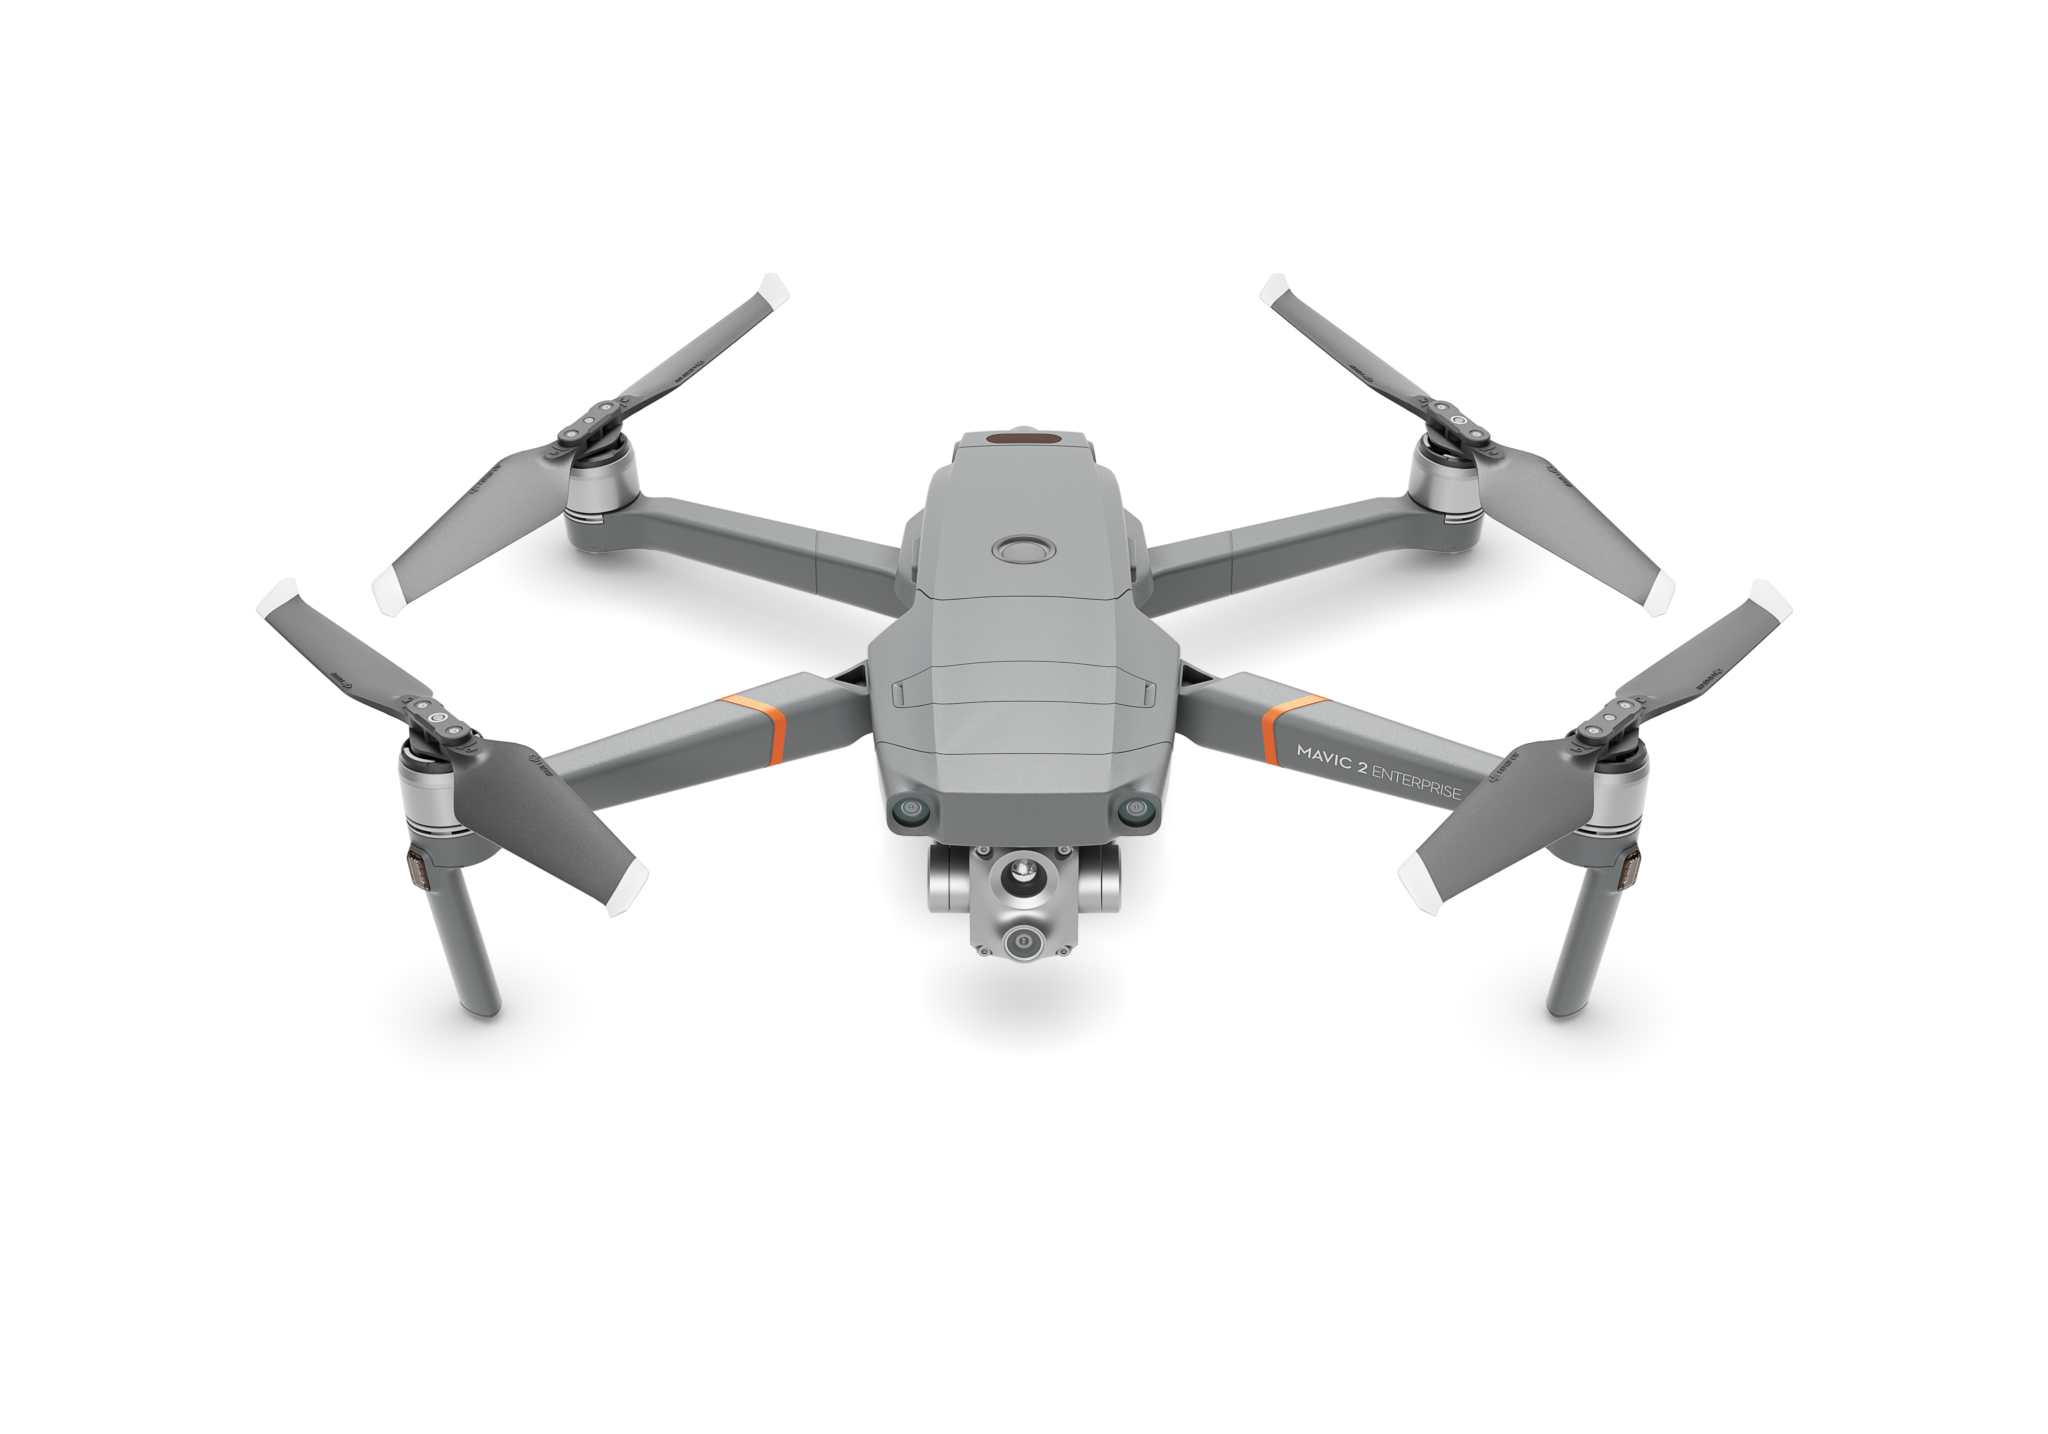 Mavic 2 Enterprise Advanced RTK with smart controller - Drone Shop Perth